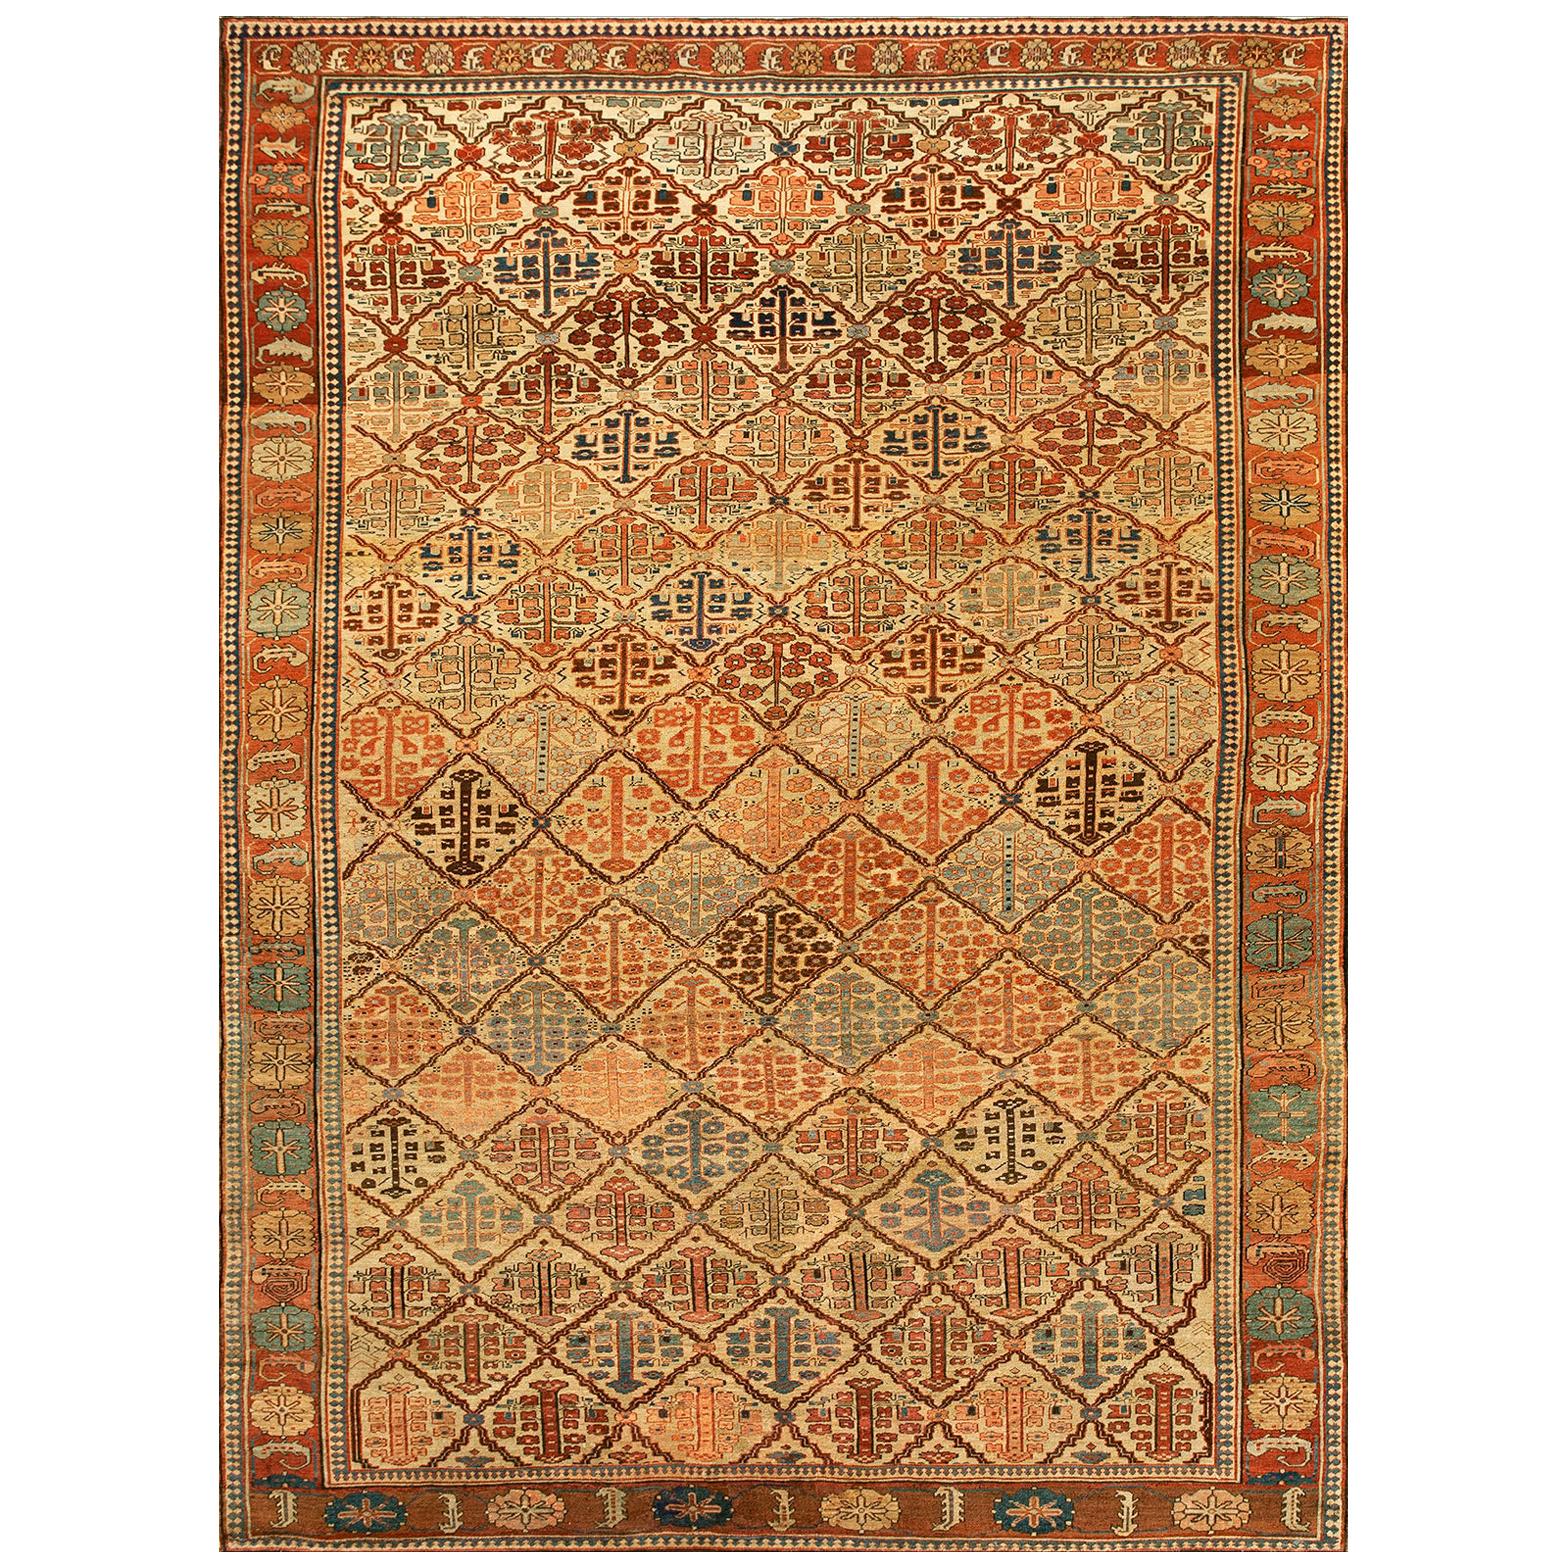 19th Century N.W. Persian Bakshaiesh Carpet ( 9' x 13'2" - 275 x 402 )